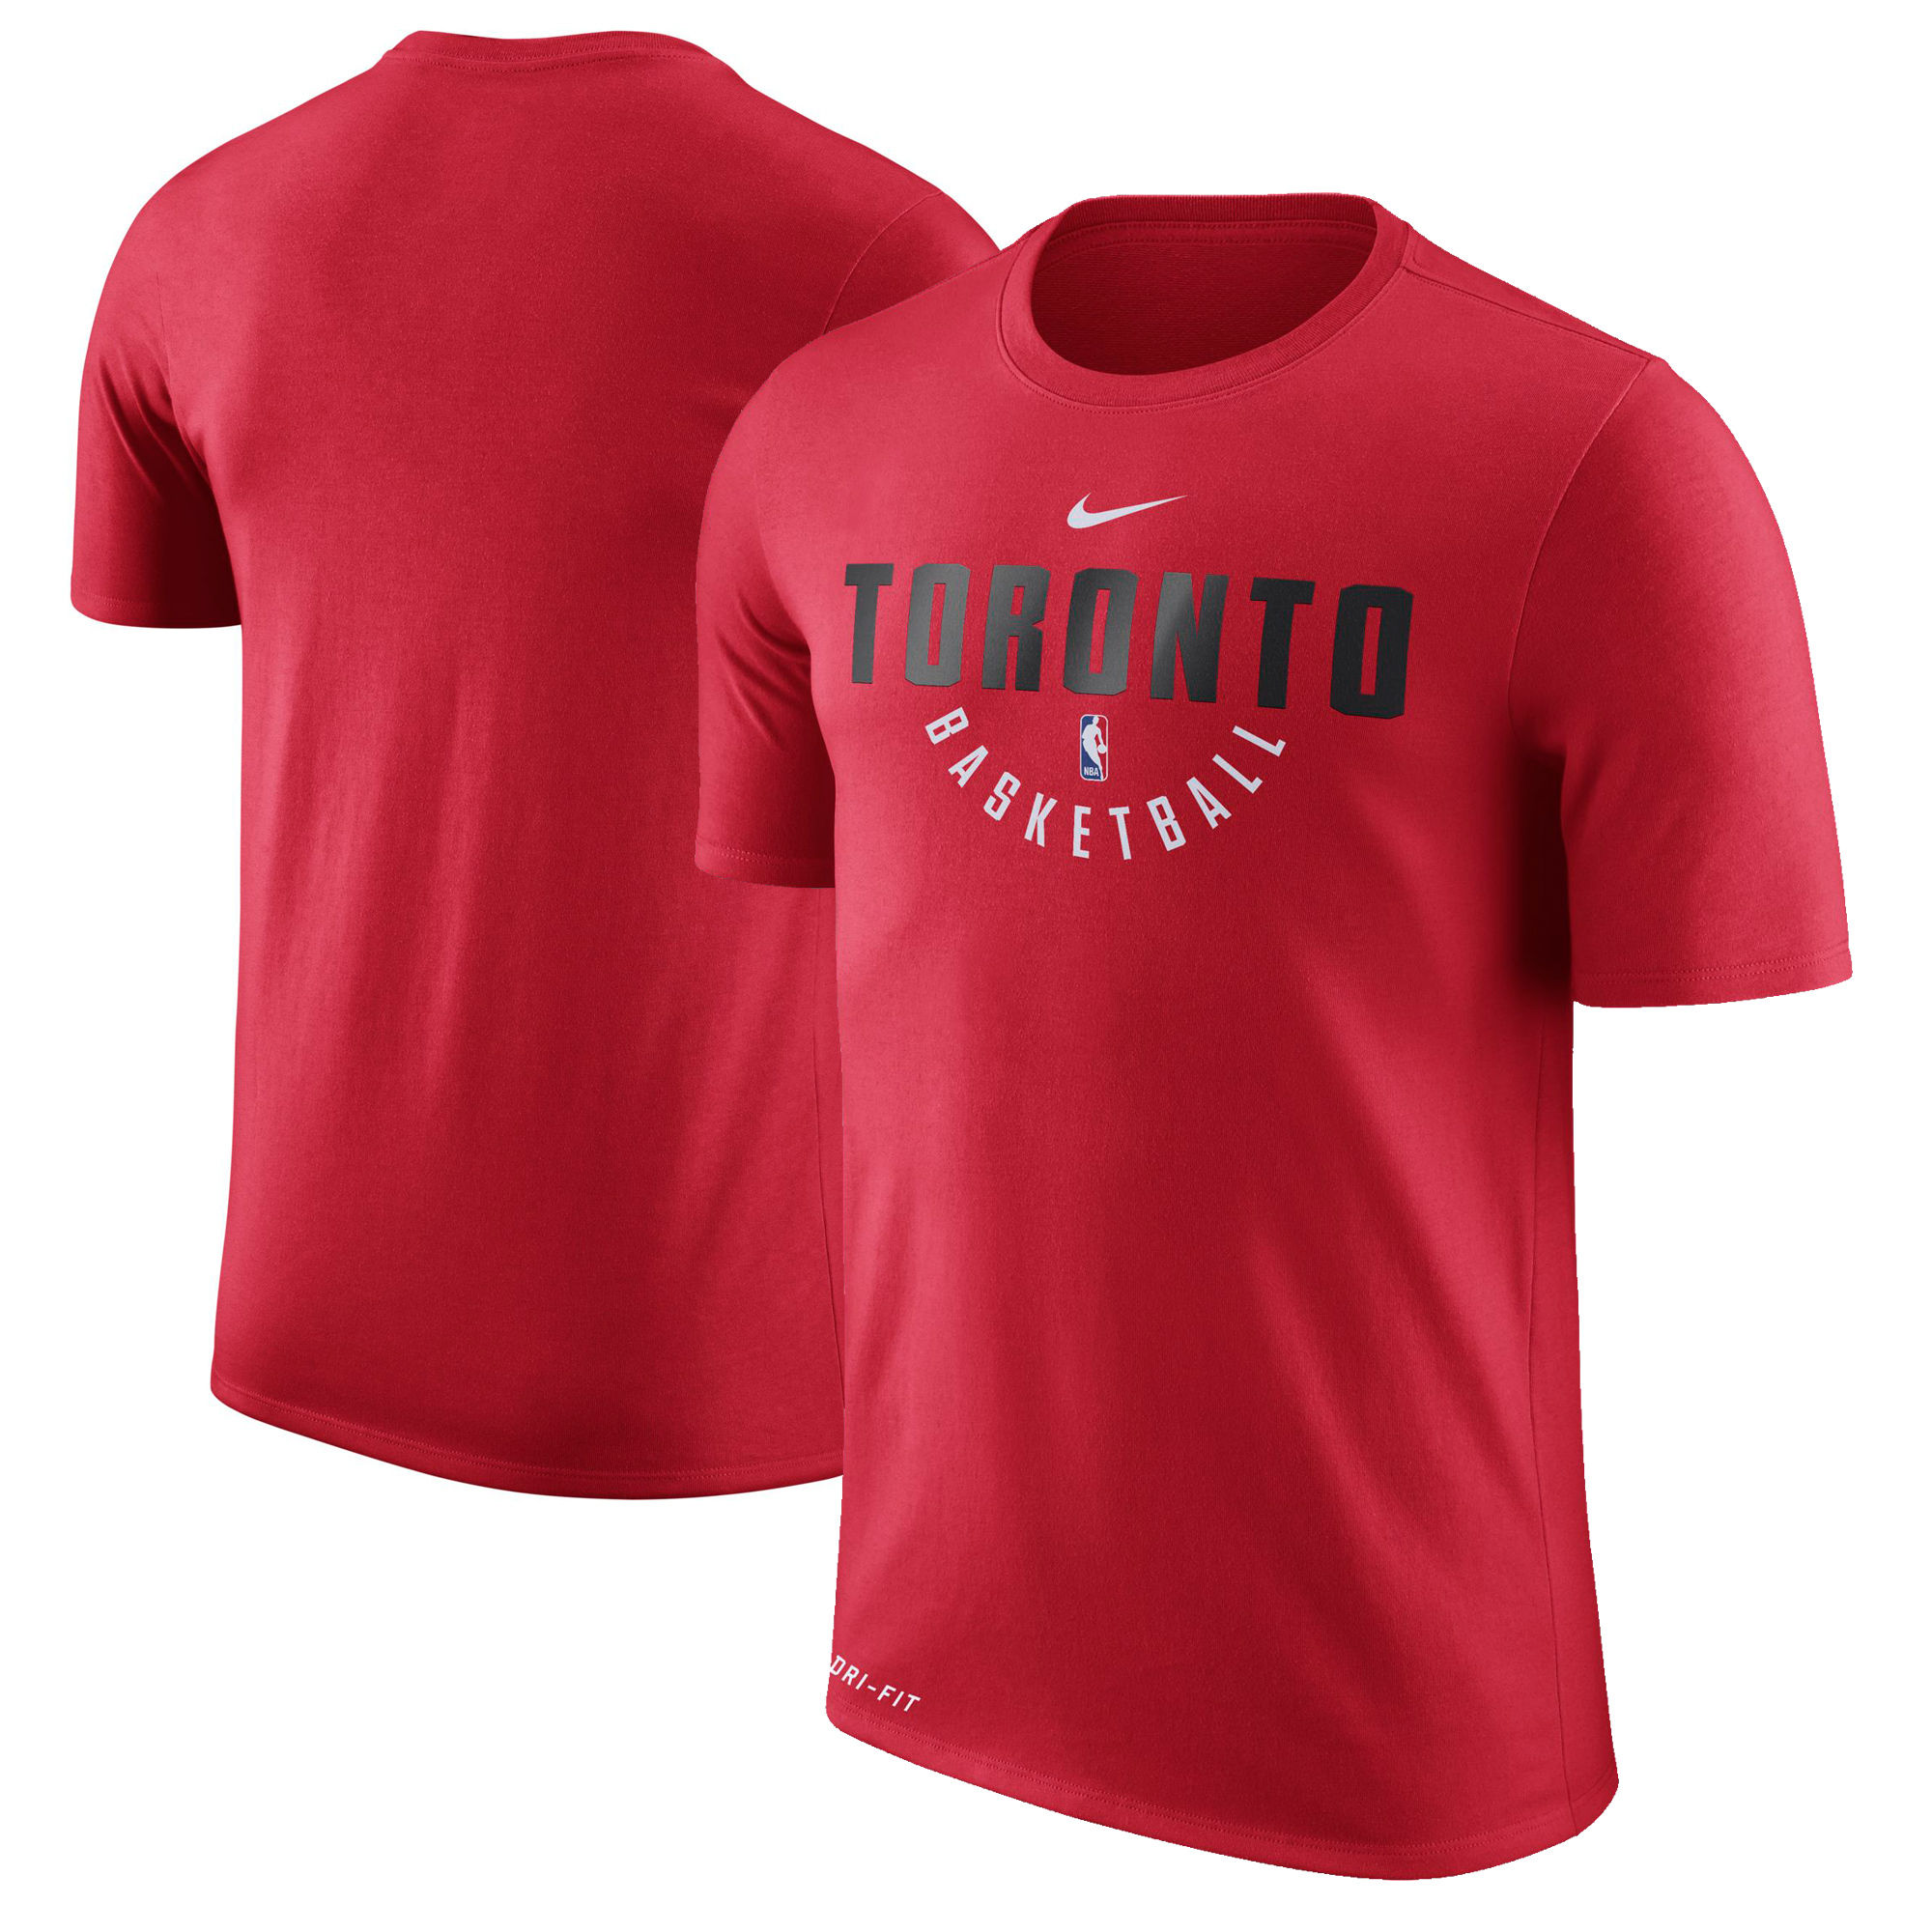 Toronto Raptors Red Nike Practice Performance T-Shirt